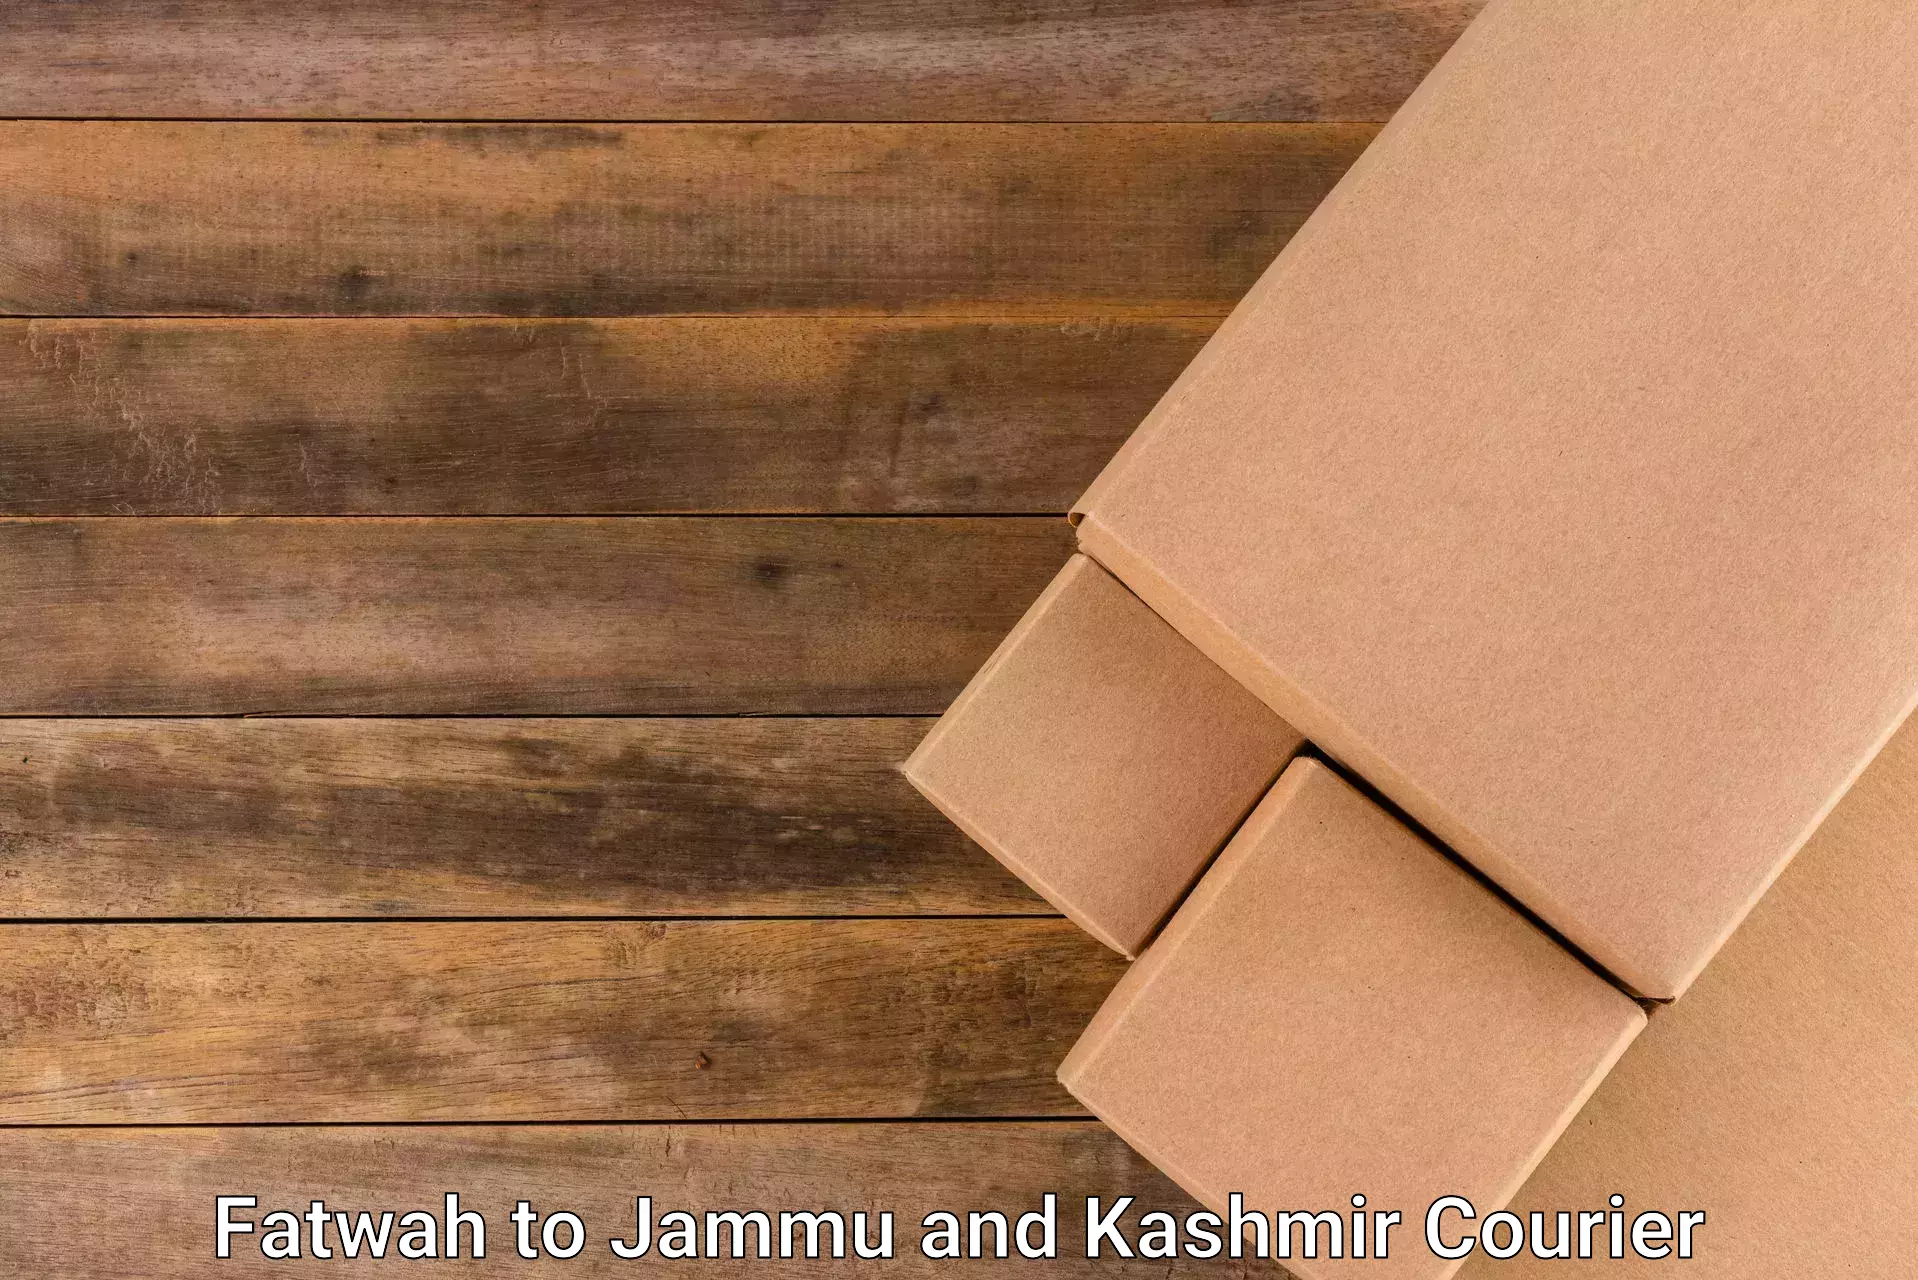 Efficient cargo handling Fatwah to Jammu and Kashmir